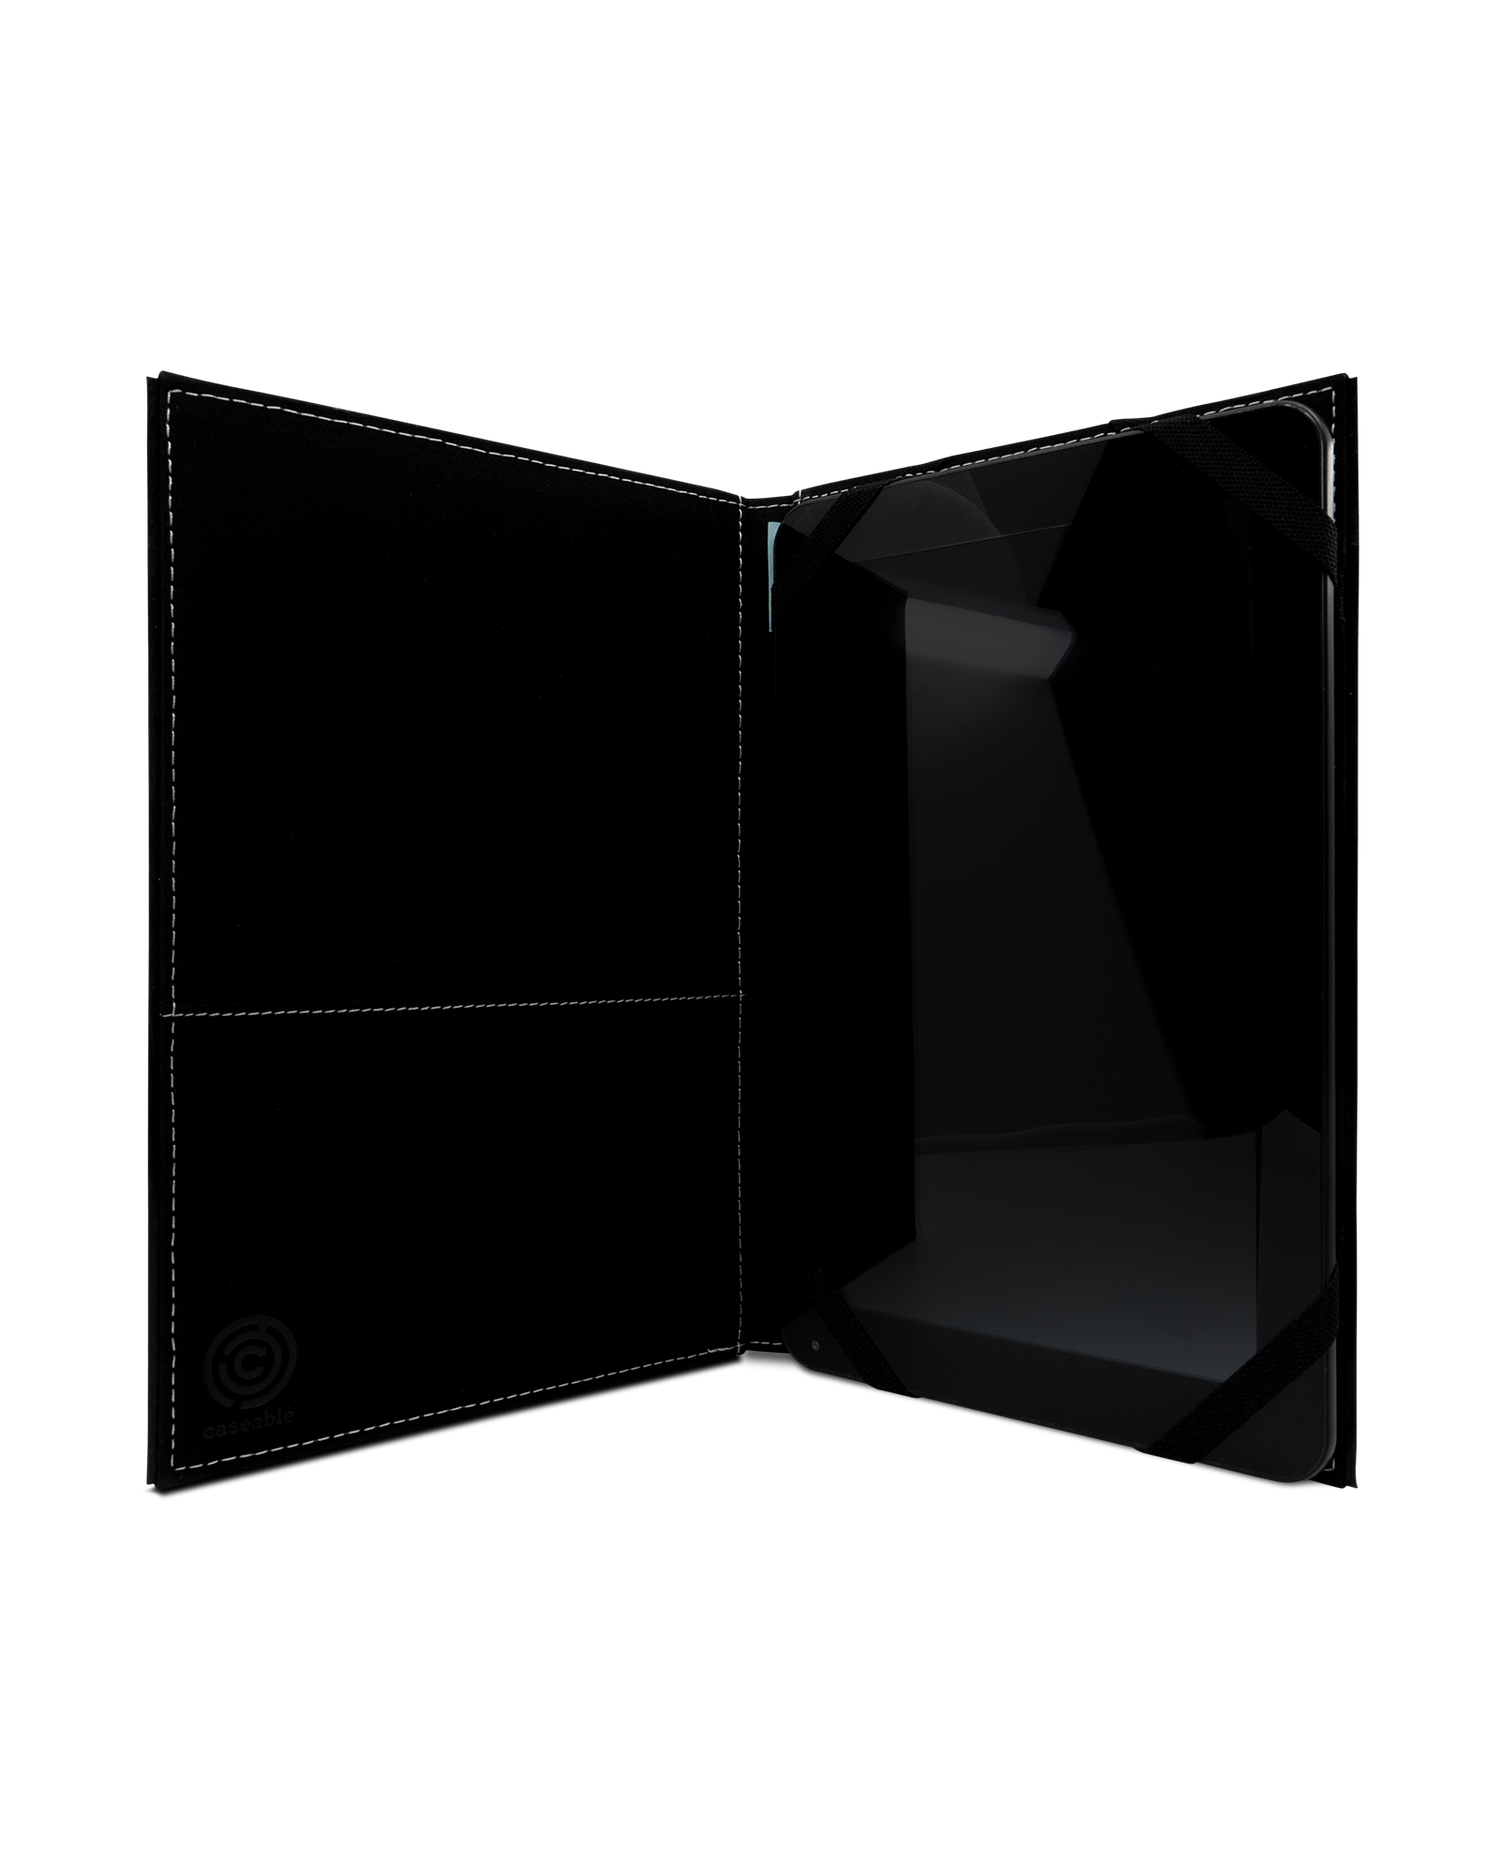 Spec Ops Dark Tablet Case L: Opened interior view